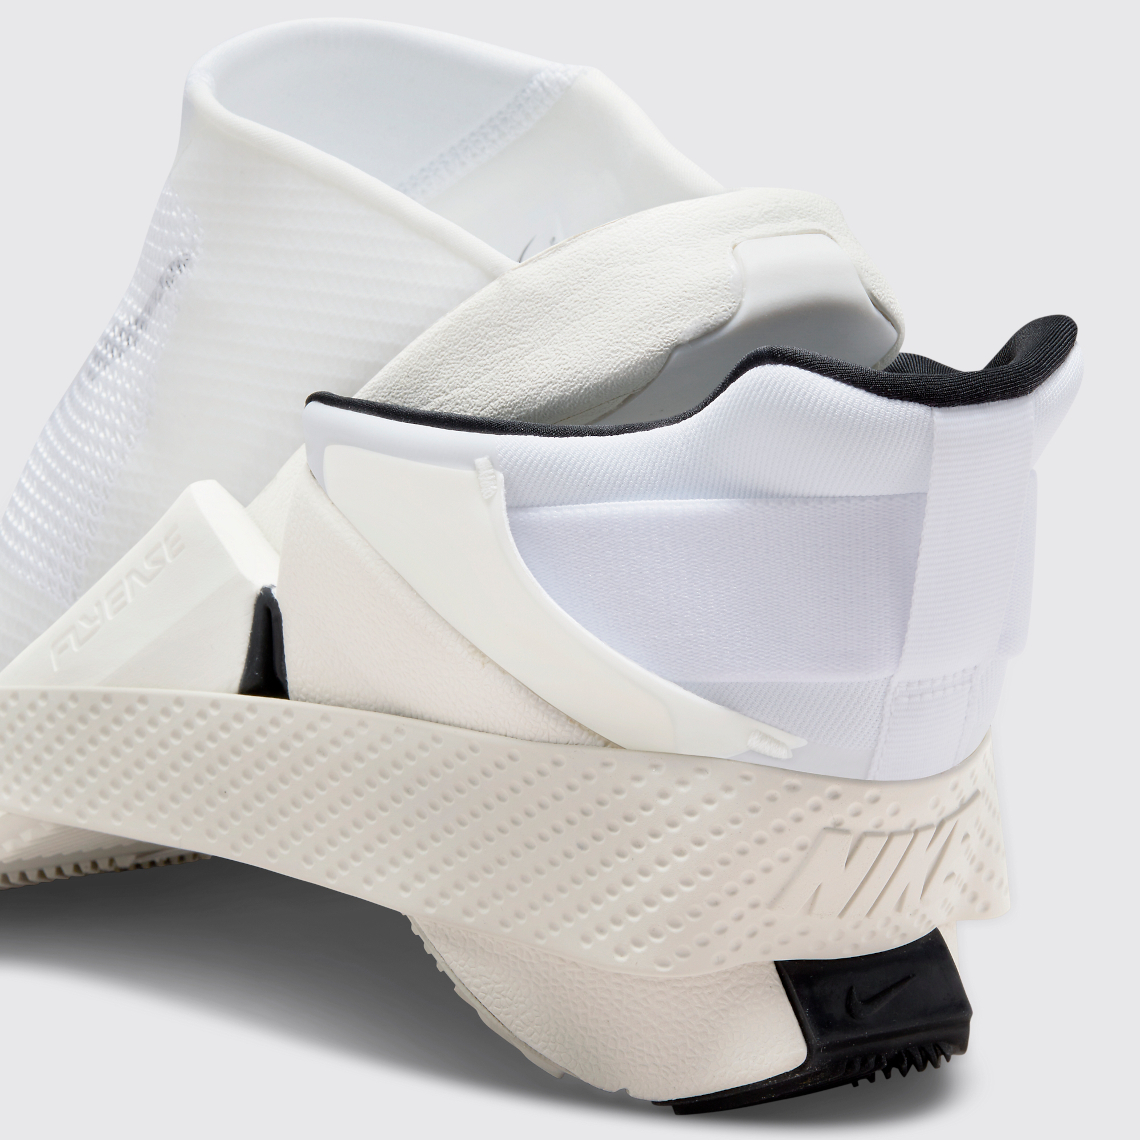 Nike Go FlyEase "White/Sail" CW5883-101 Release | SneakerNews.com